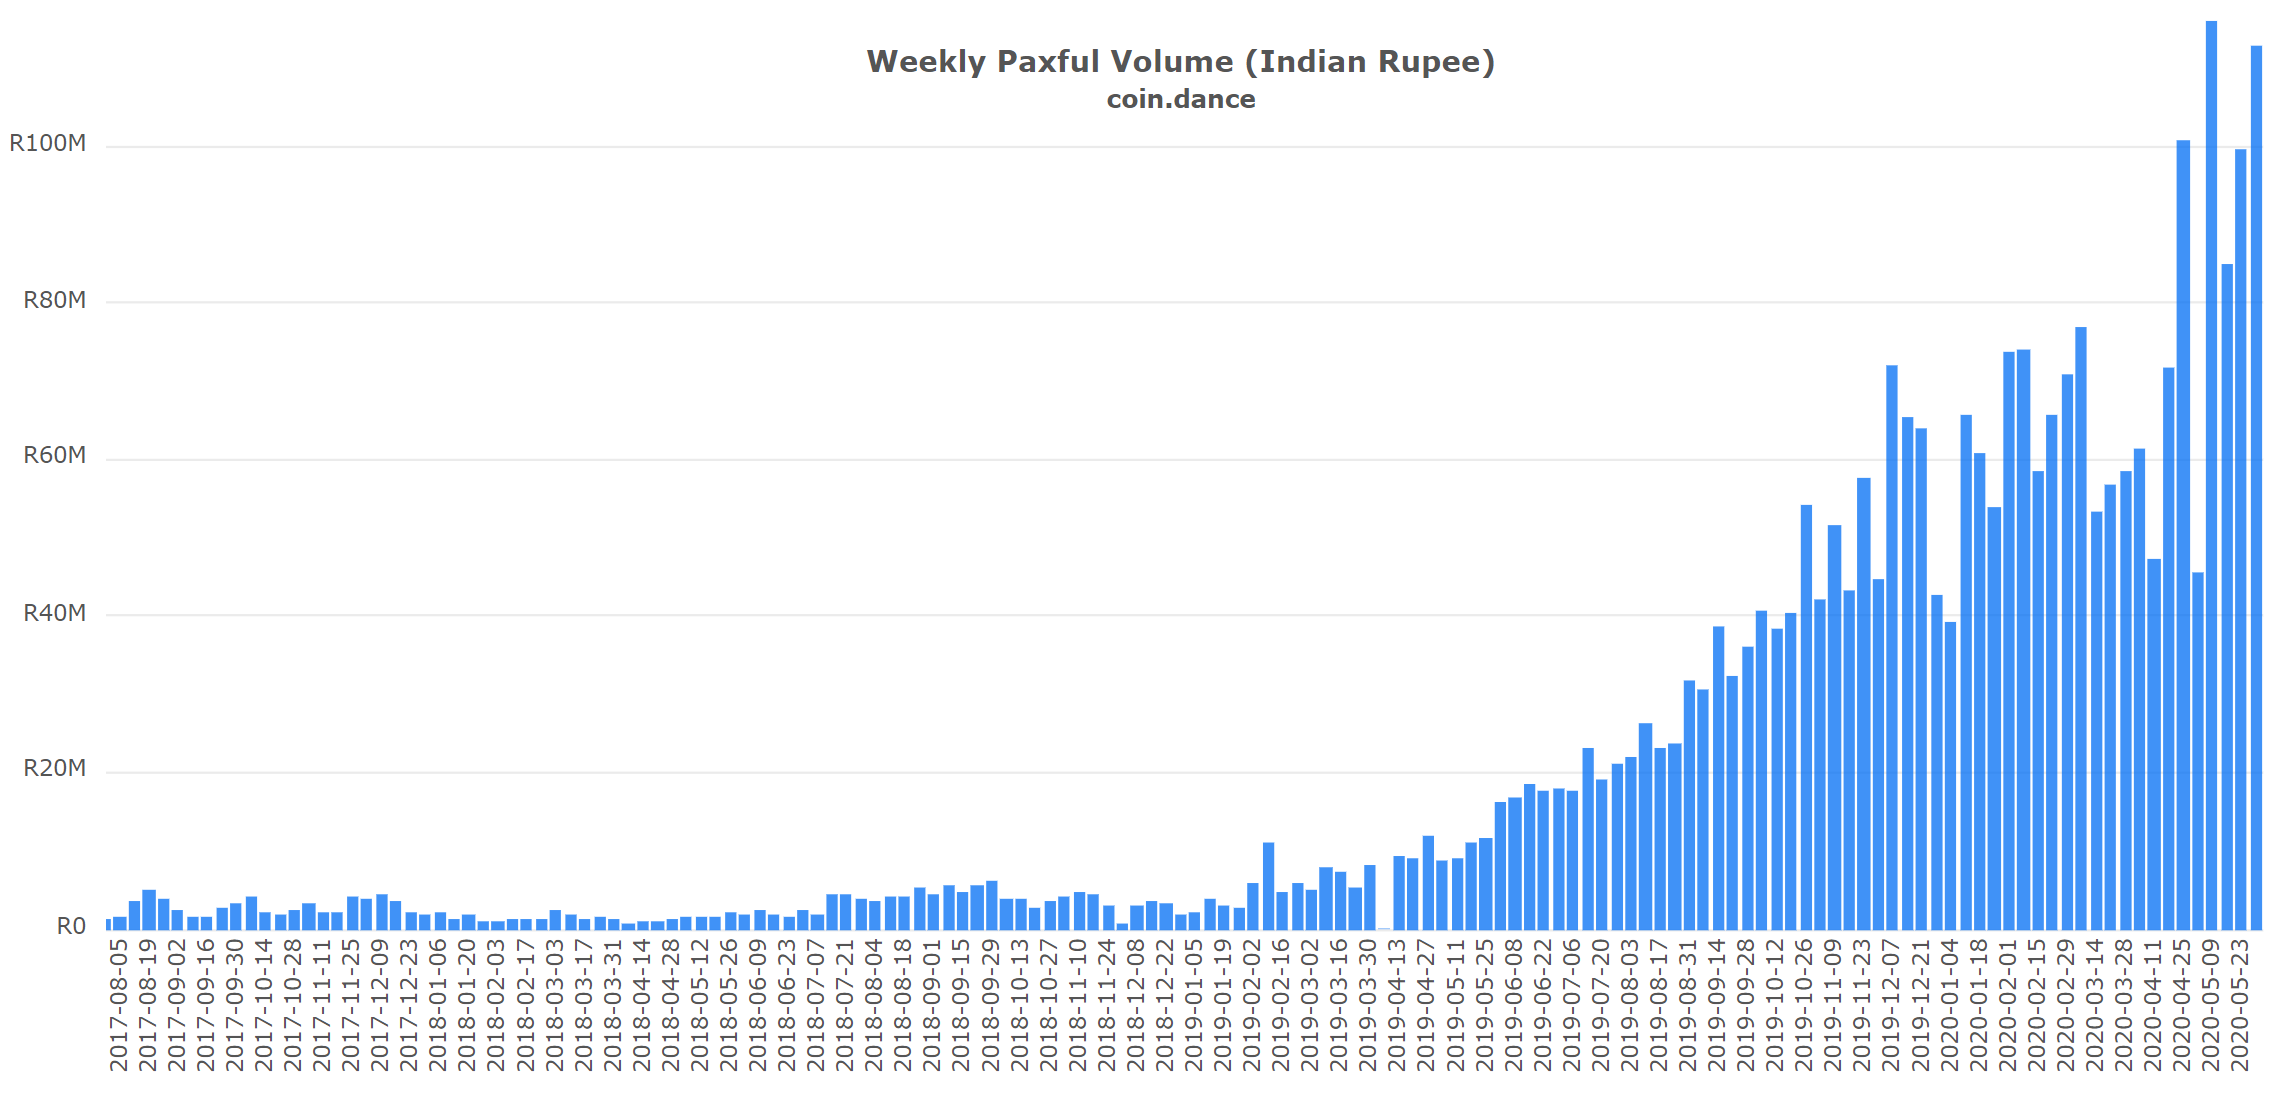 India's Crypto Trading Volume Soars Amid Economic Crisis